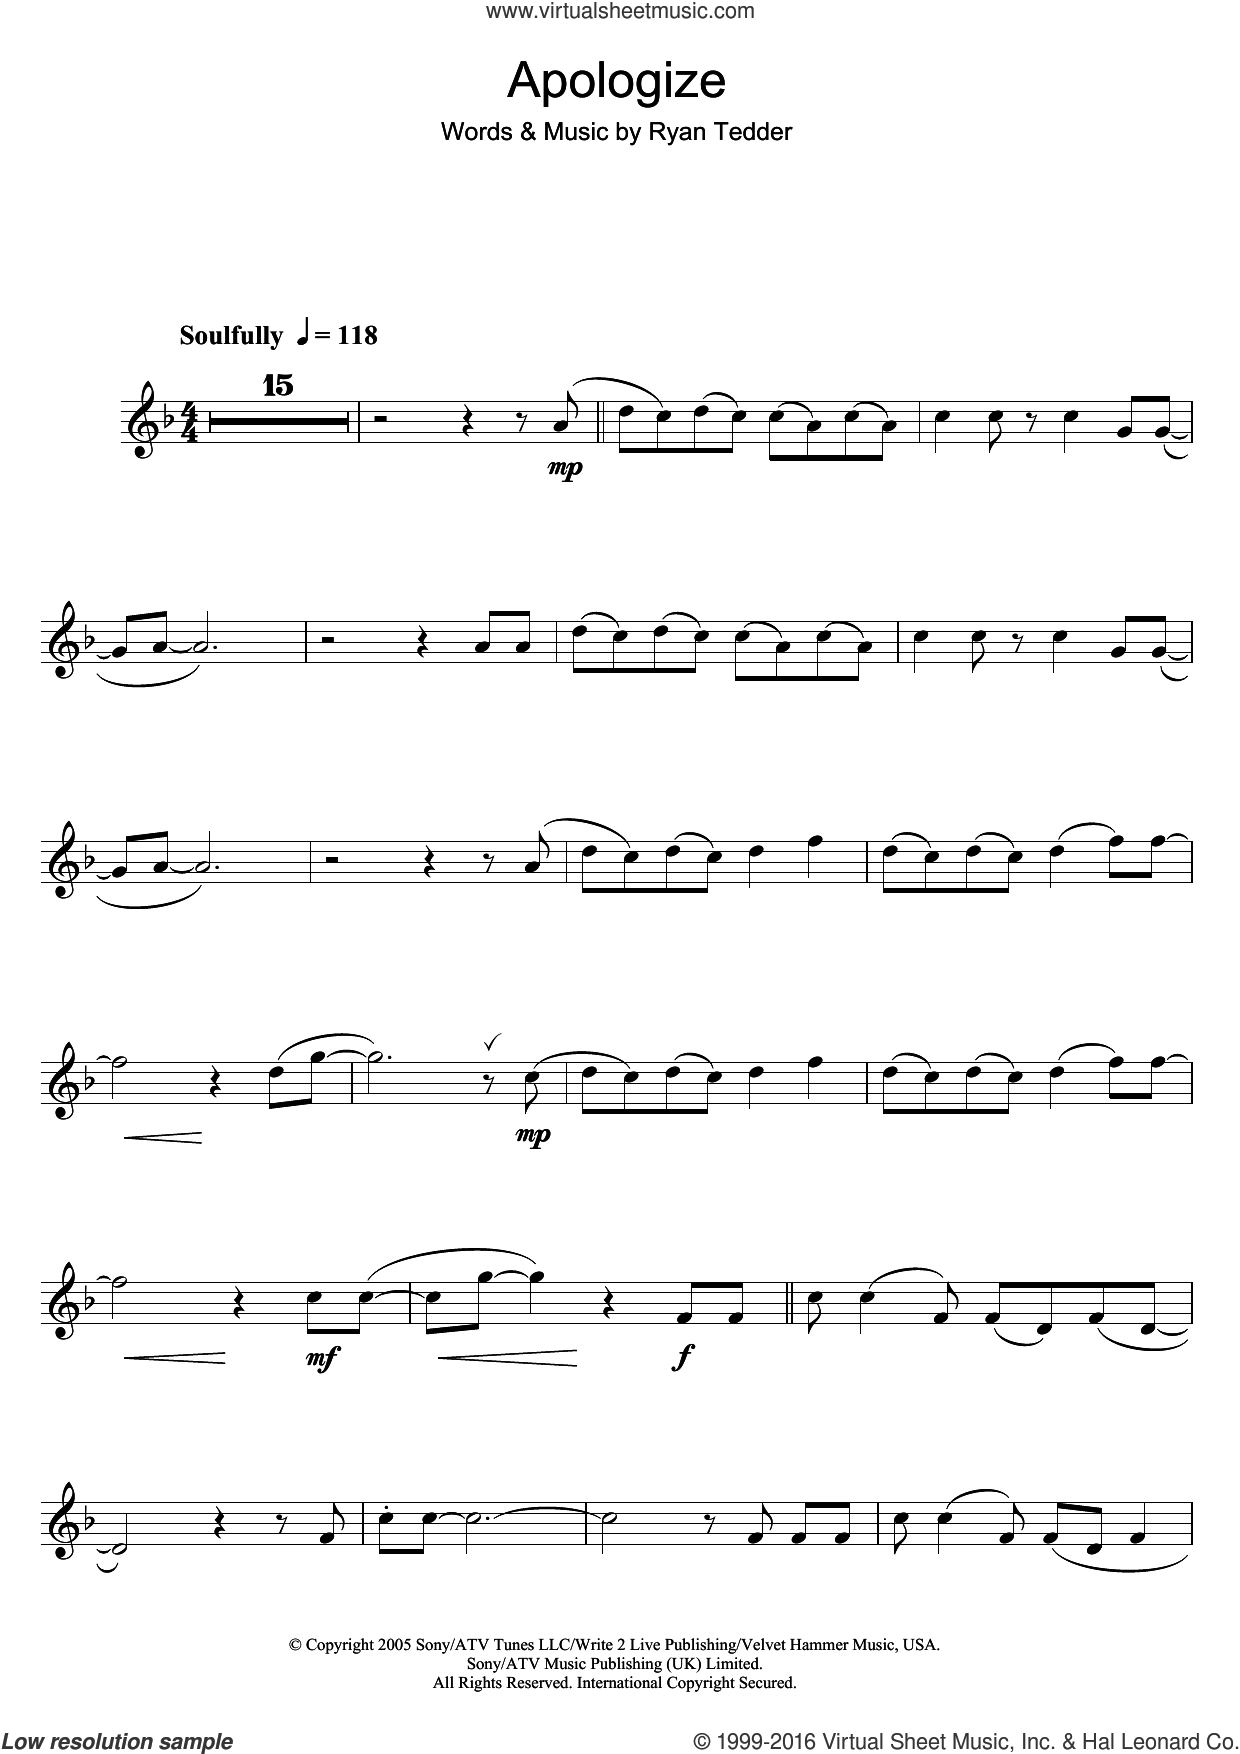 Onerepublic - Apologize Sheet Music For Clarinet Solo [Pdf] - Apologize Piano Sheet Music Free Printable